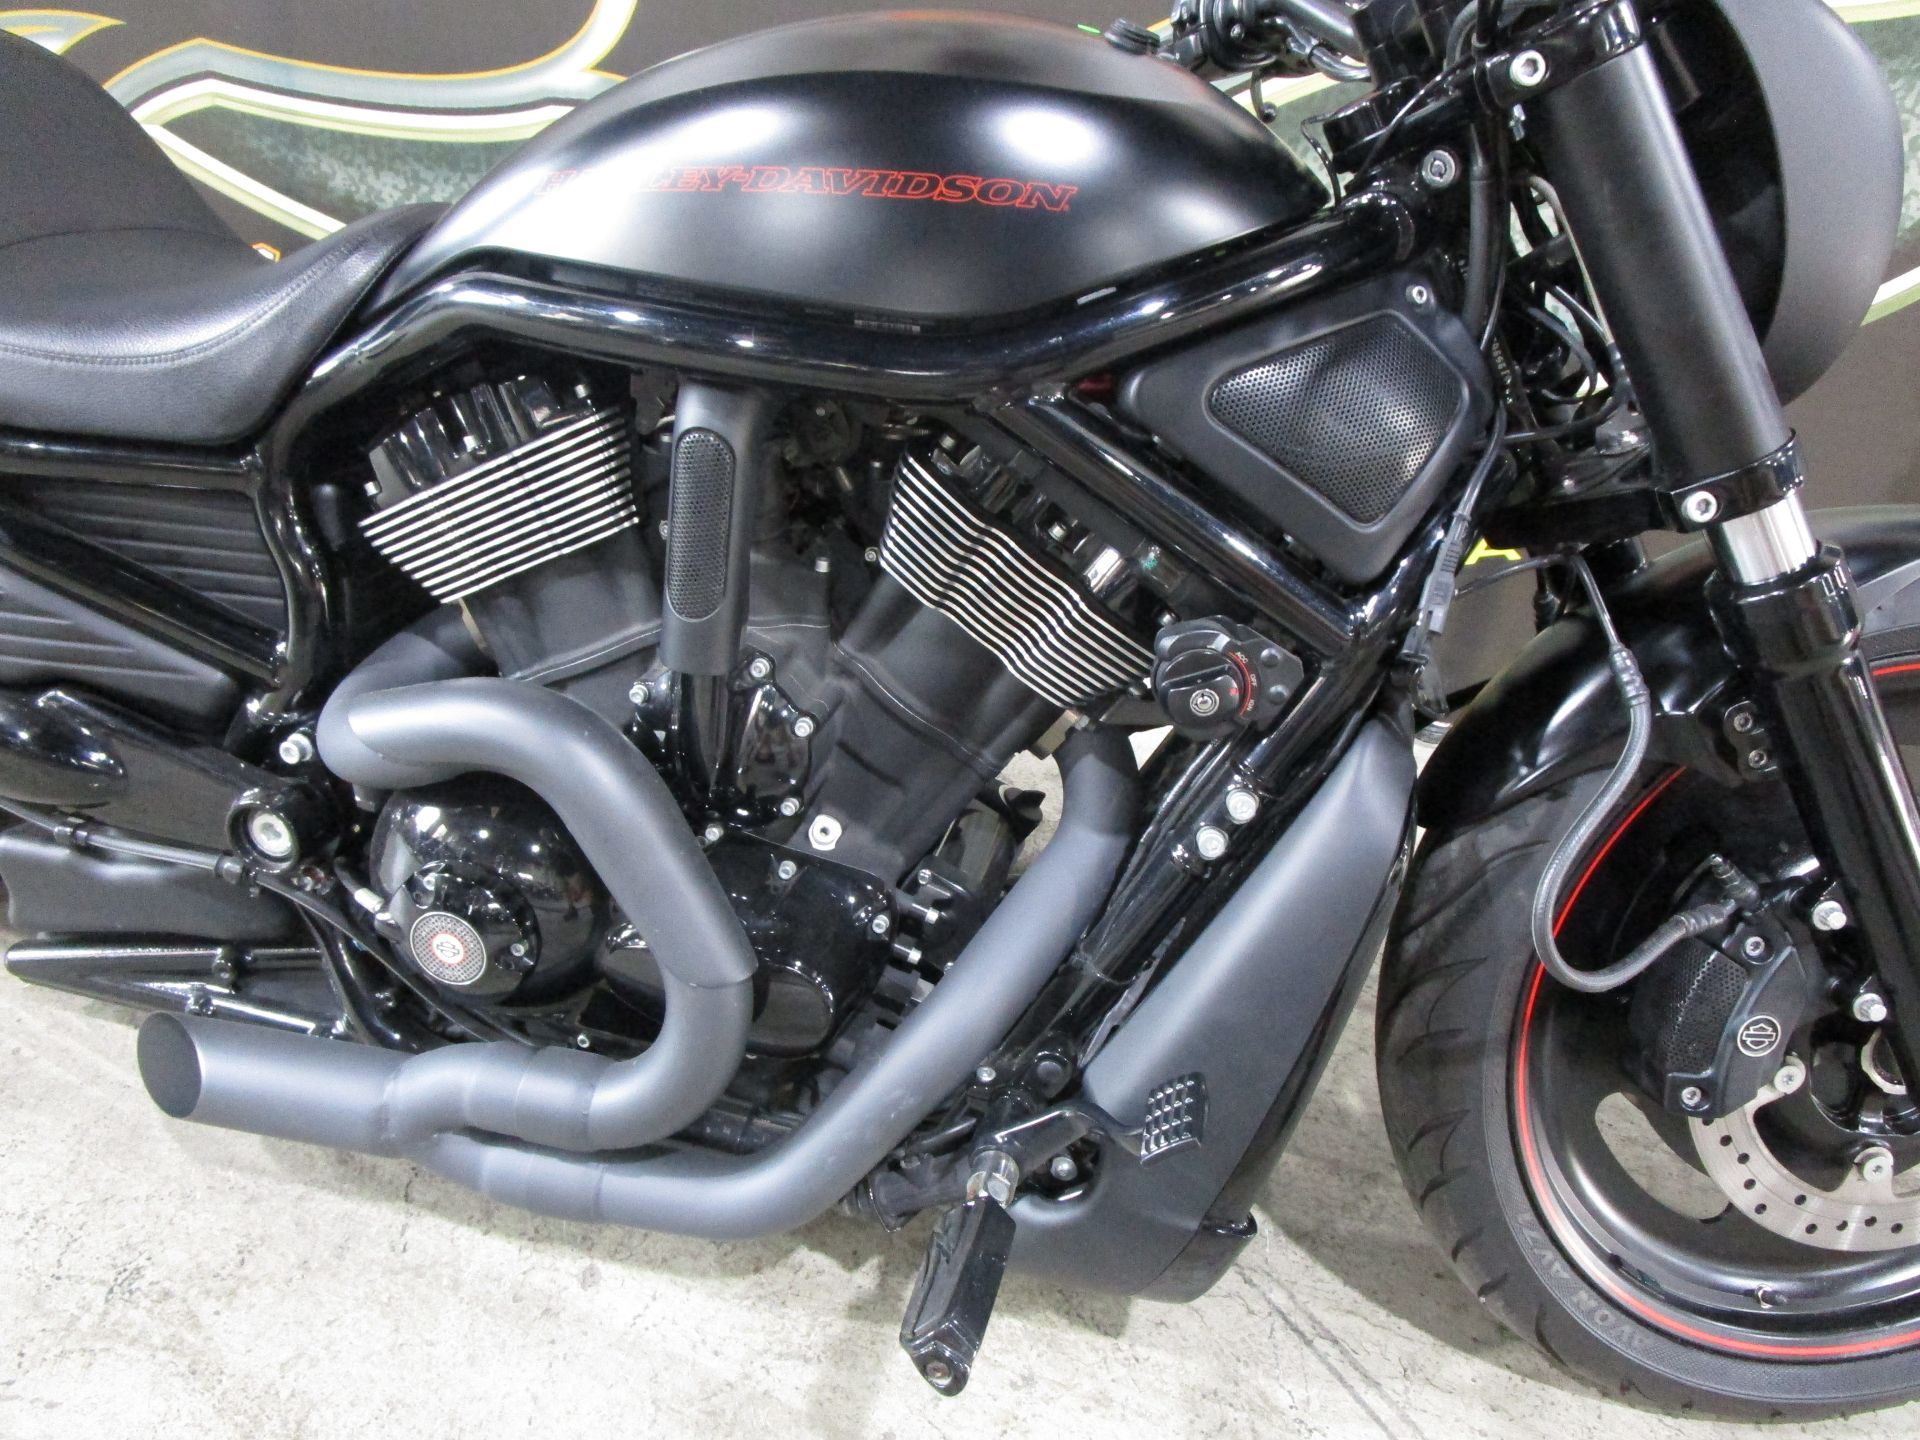 2008 Harley-Davidson Night Rod® Special in South Saint Paul, Minnesota - Photo 8